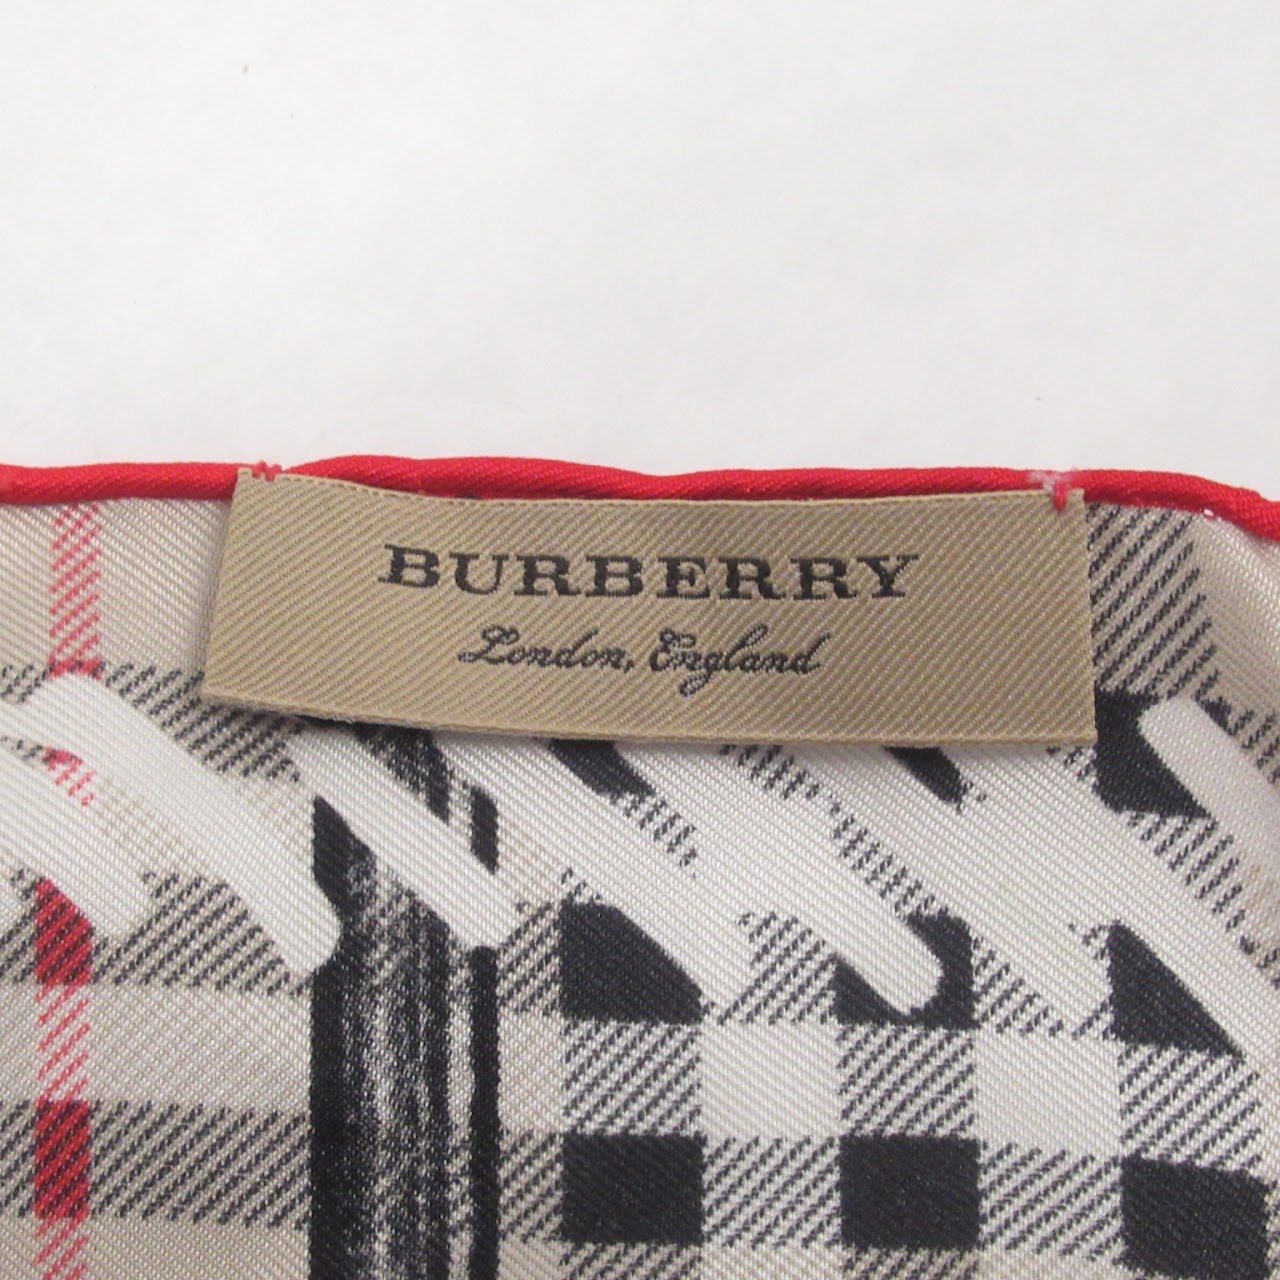 Burberry Scribble Check Silk Scarf